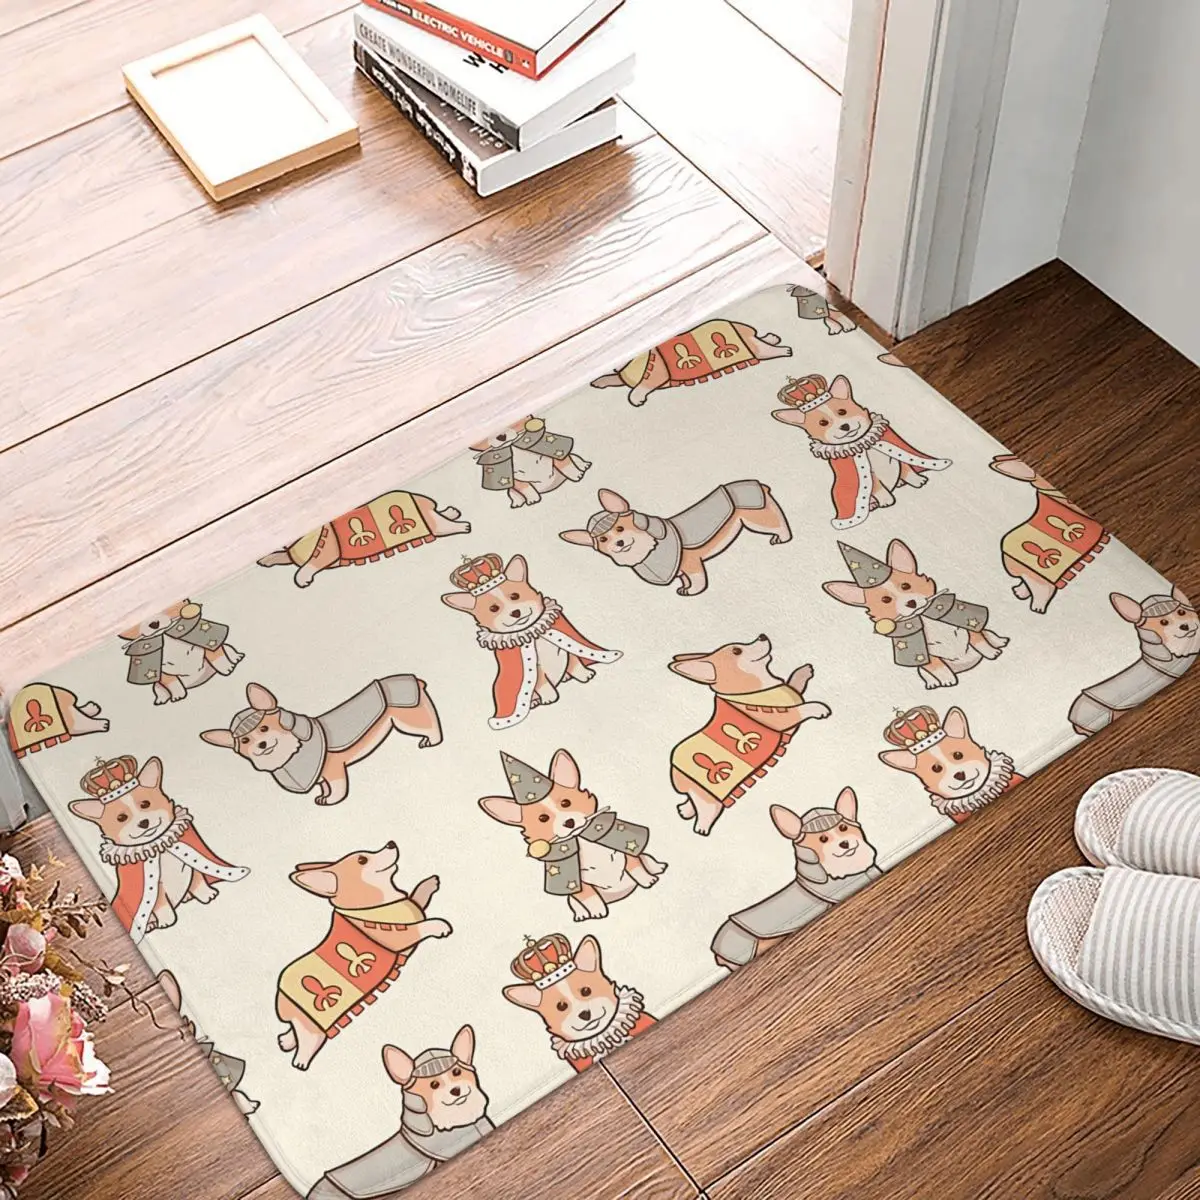 

Bath Non-Slip Carpet Medieval Fantasy Corgi Bedroom Mat Welcome Doormat Home Decoration Rug